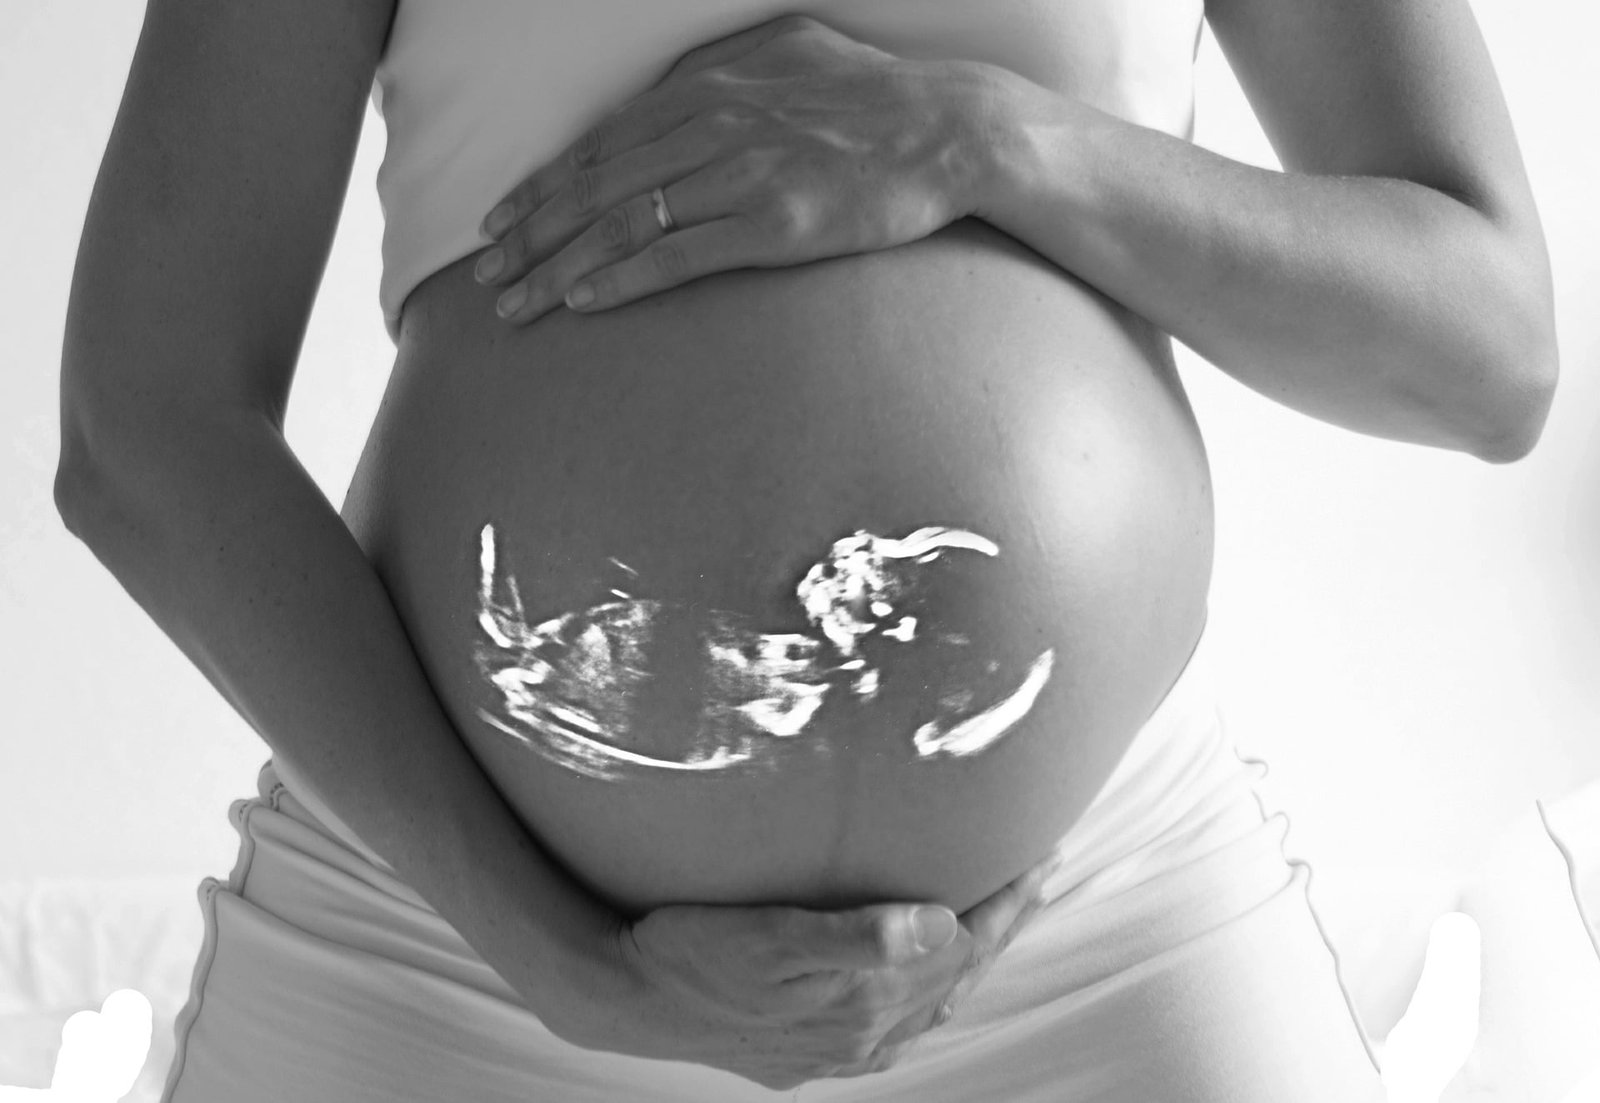 Surrogacy – Child Trafficking and Exploitation of Women? | OBJECT